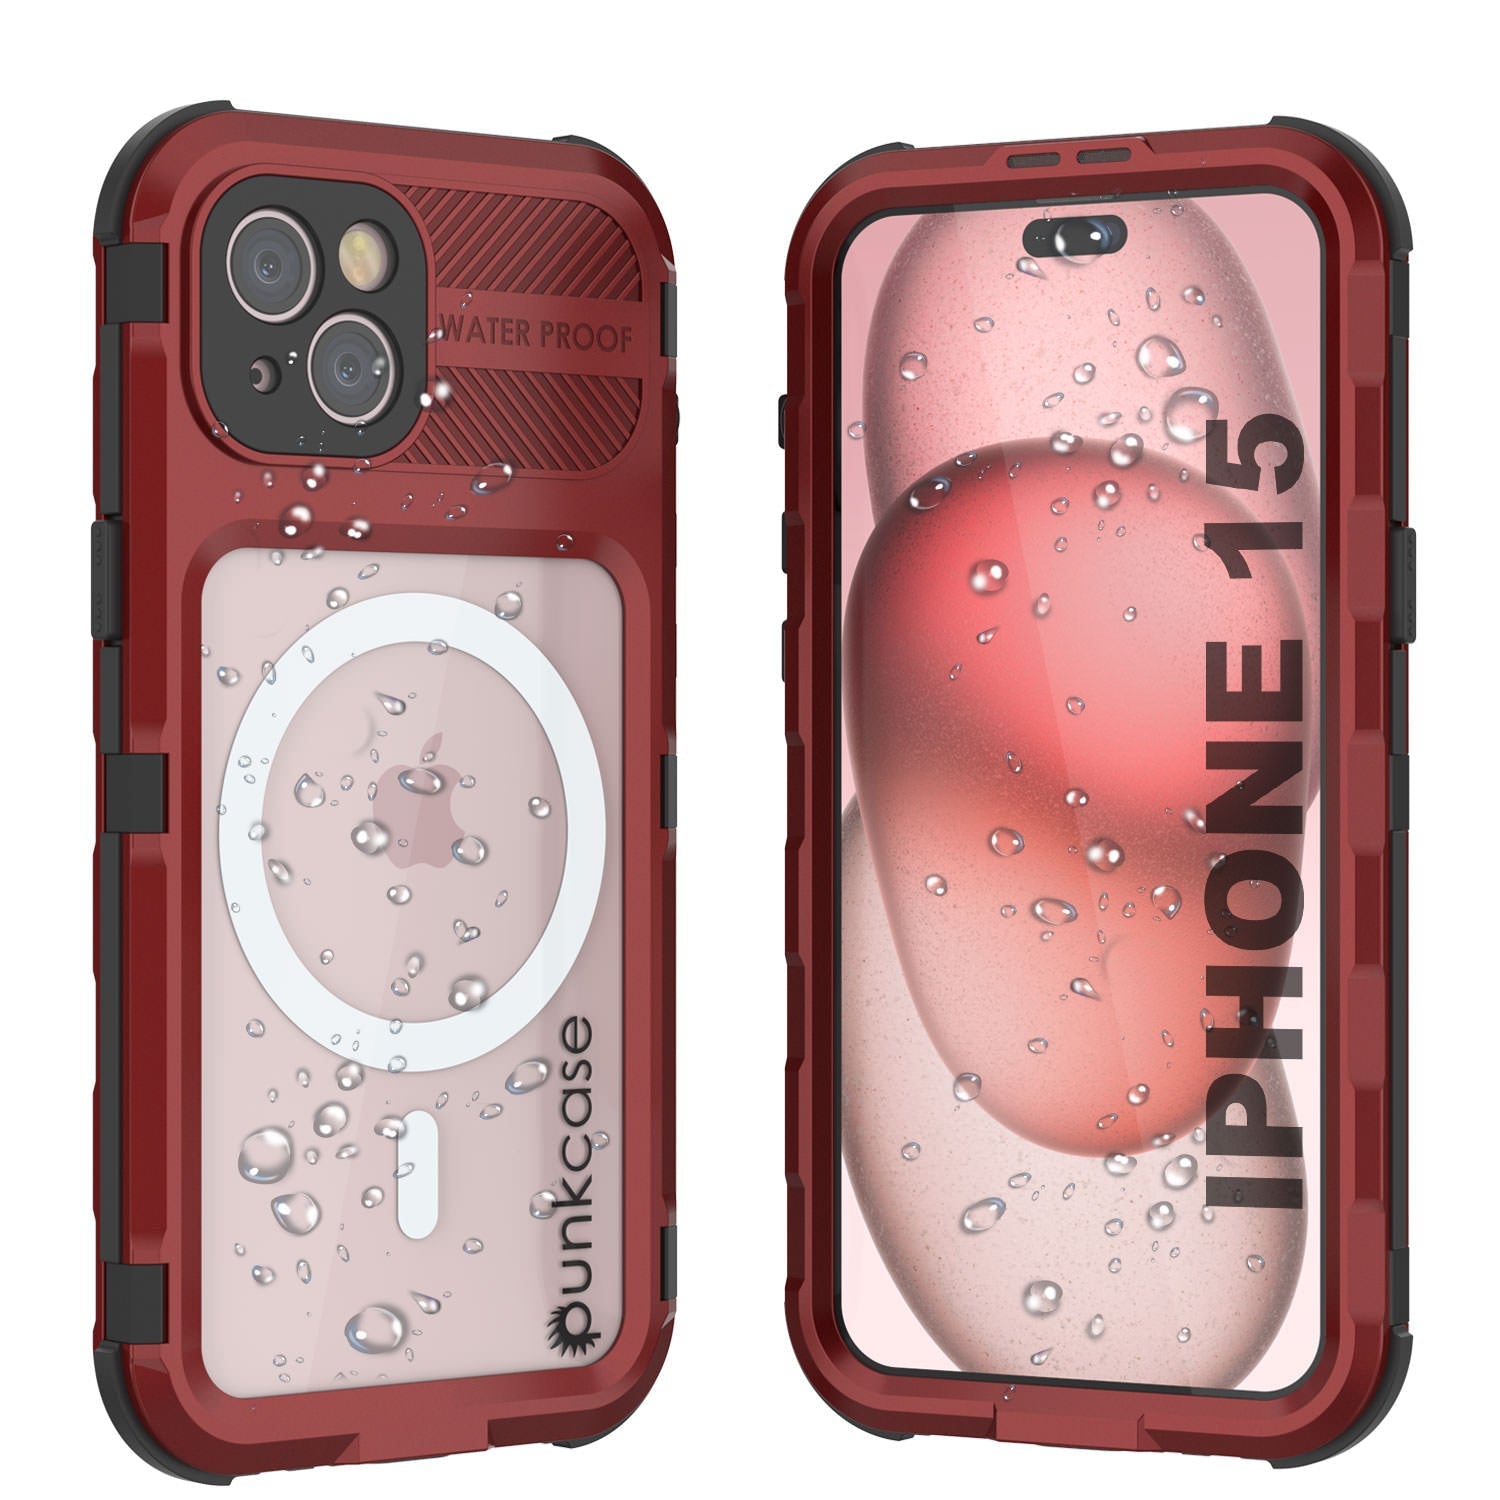 iPhone 15 Metal Extreme 2.0 Series Aluminum Waterproof Case IP68 W/Buillt in Screen Protector [Red-Black]